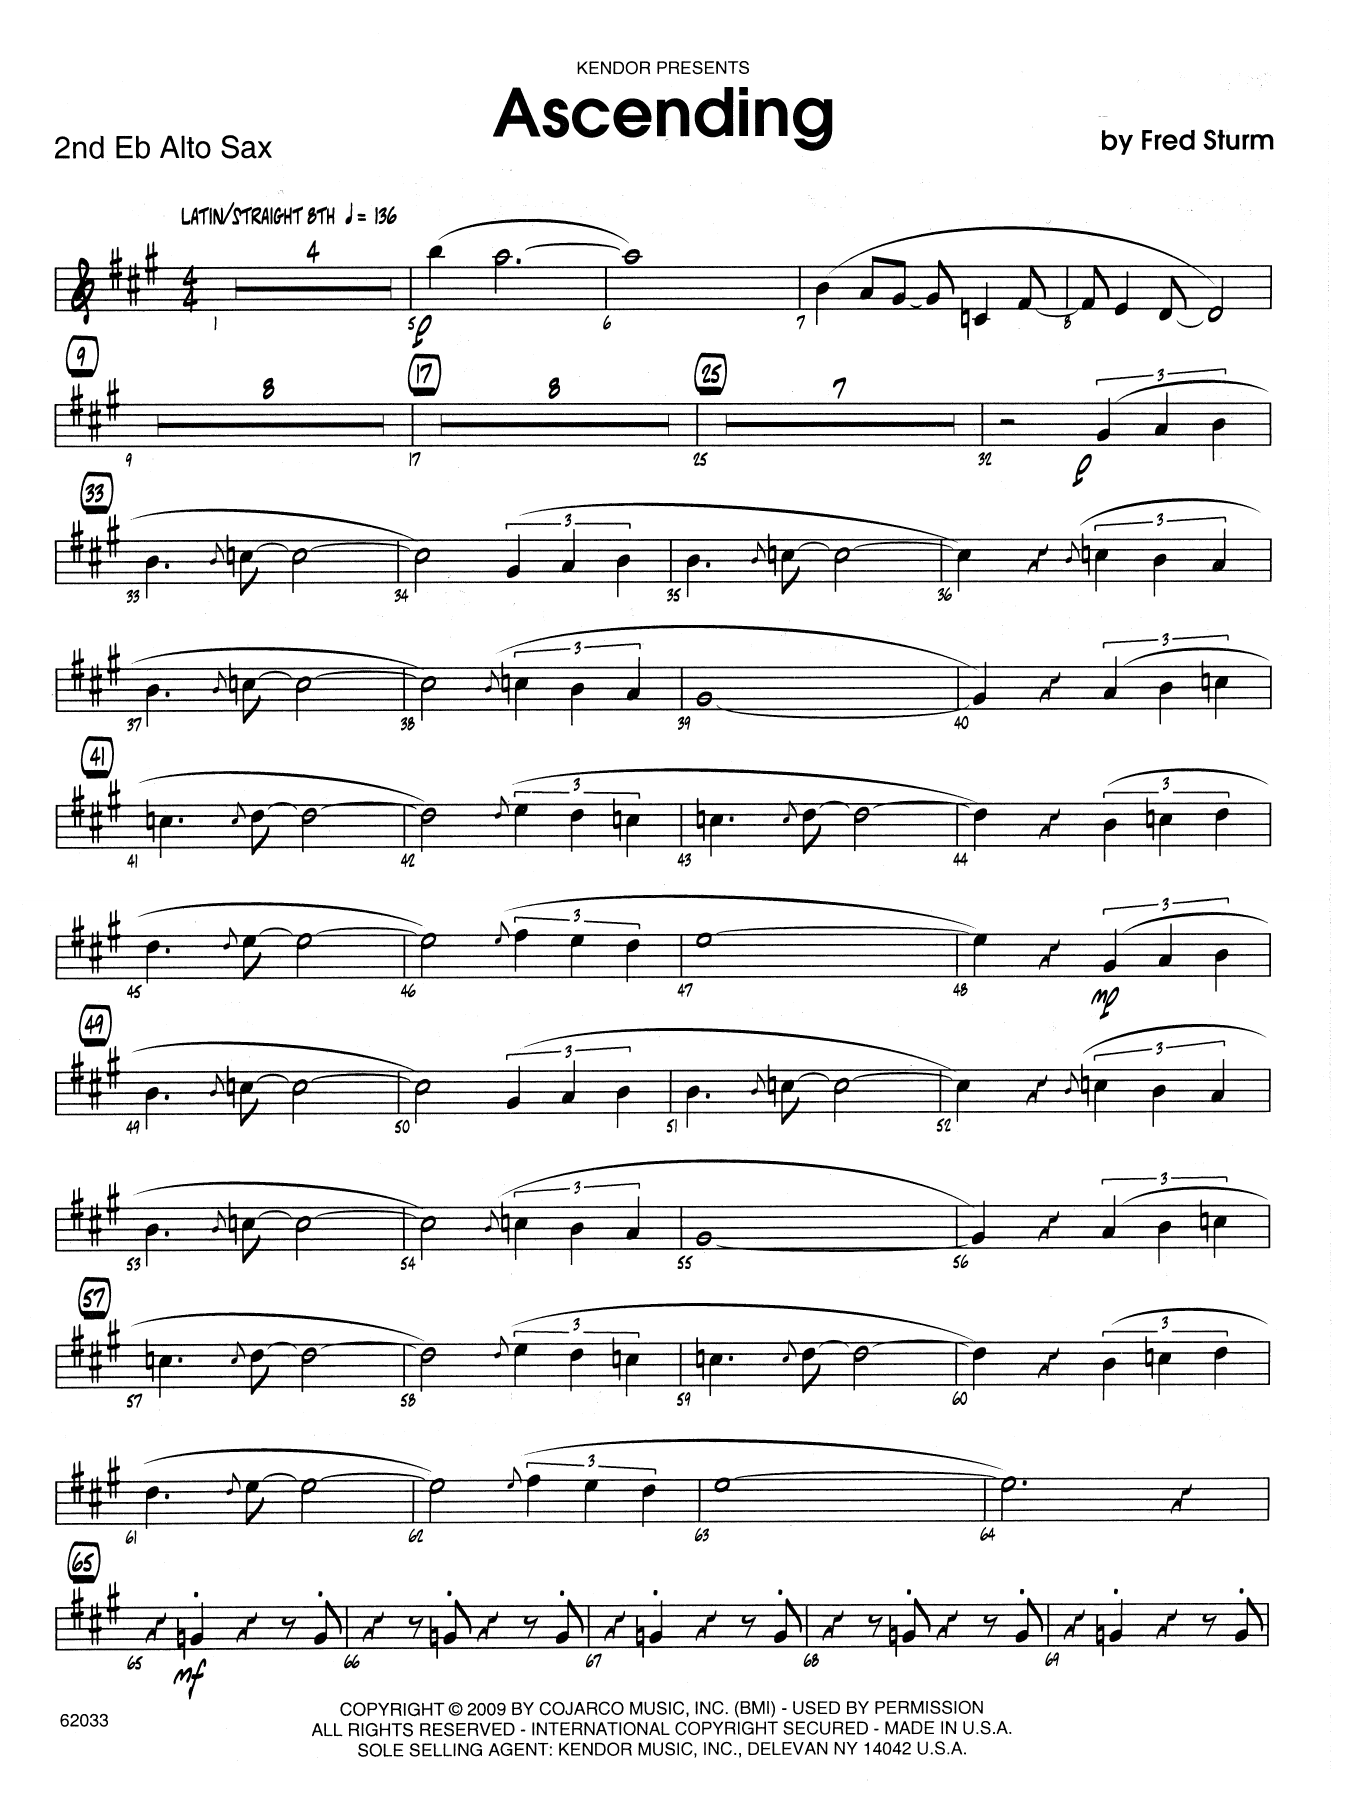 Download Fred Sturm Ascending - 2nd Eb Alto Saxophone Sheet Music